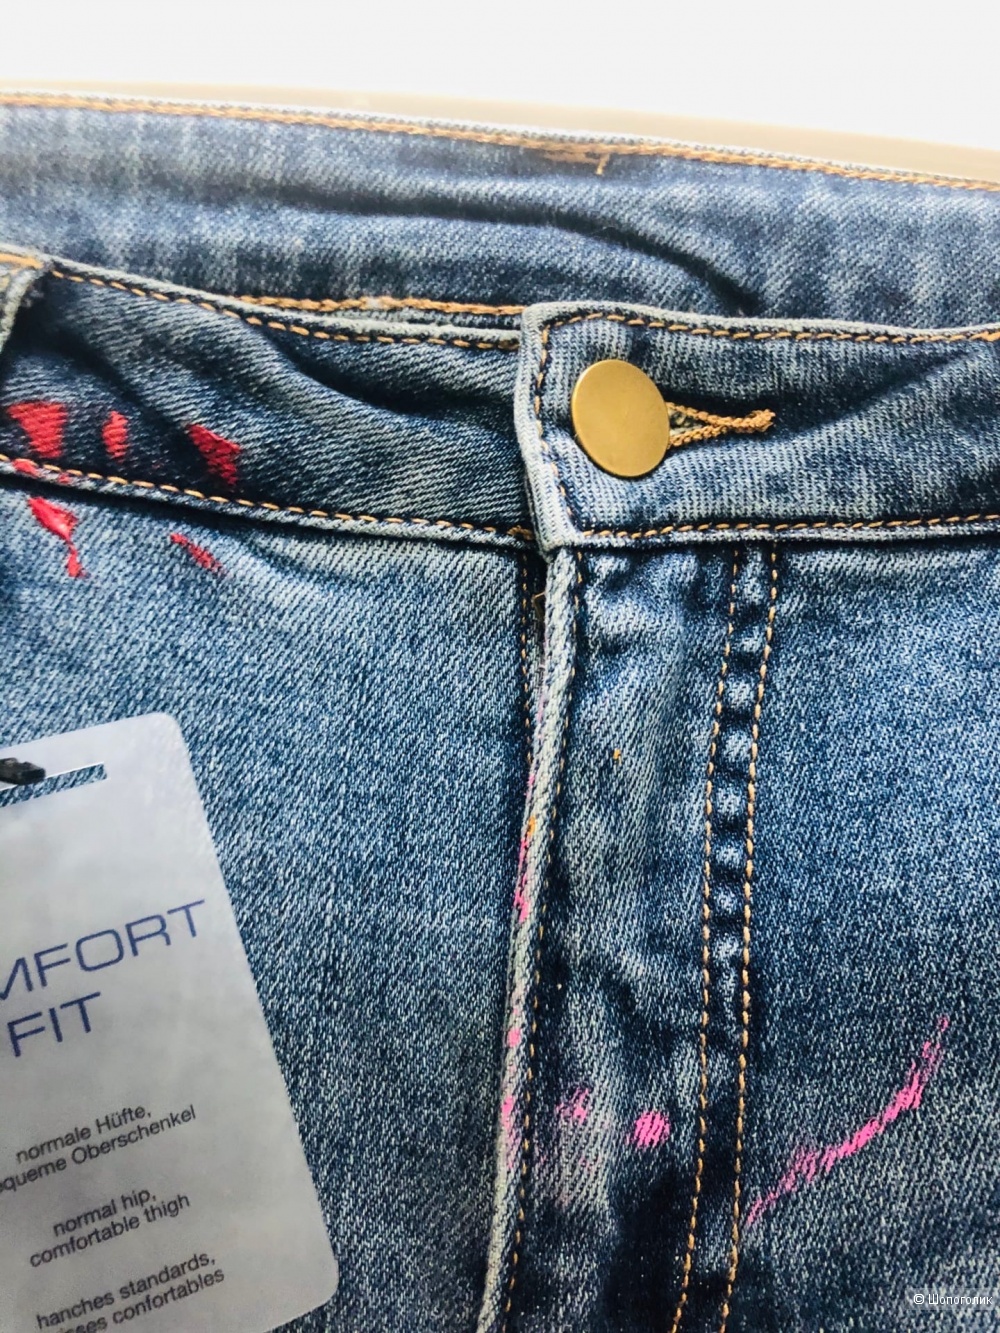 Джинсы Best Connections Mom Jeans.Размер 44-46.